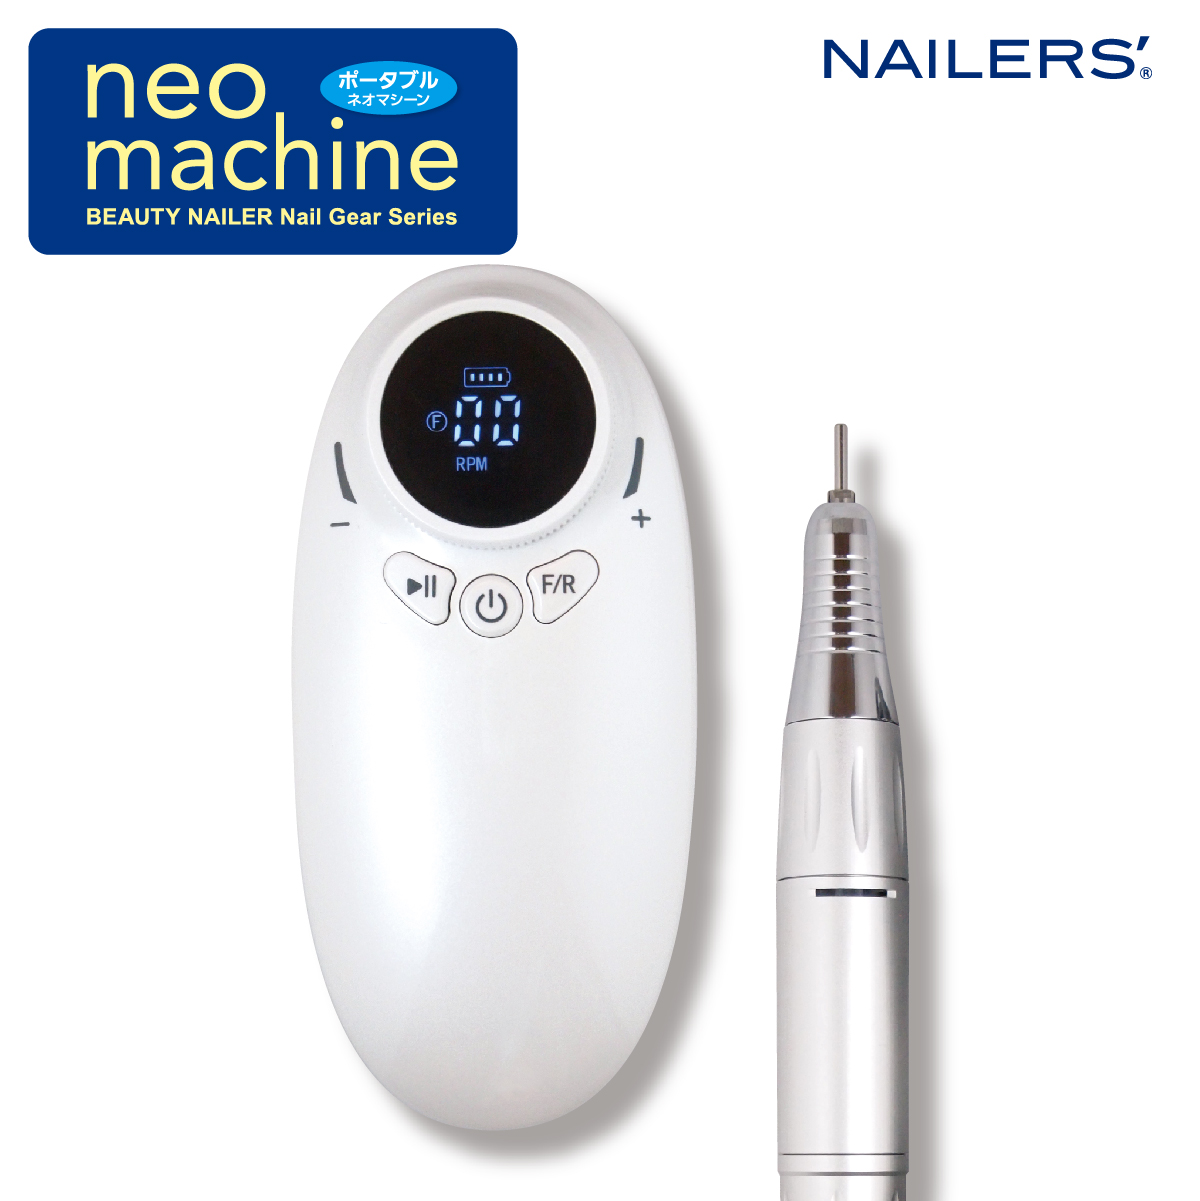 NAILERS' neo machine ポータブル ネオマシーン(NM-1)画像